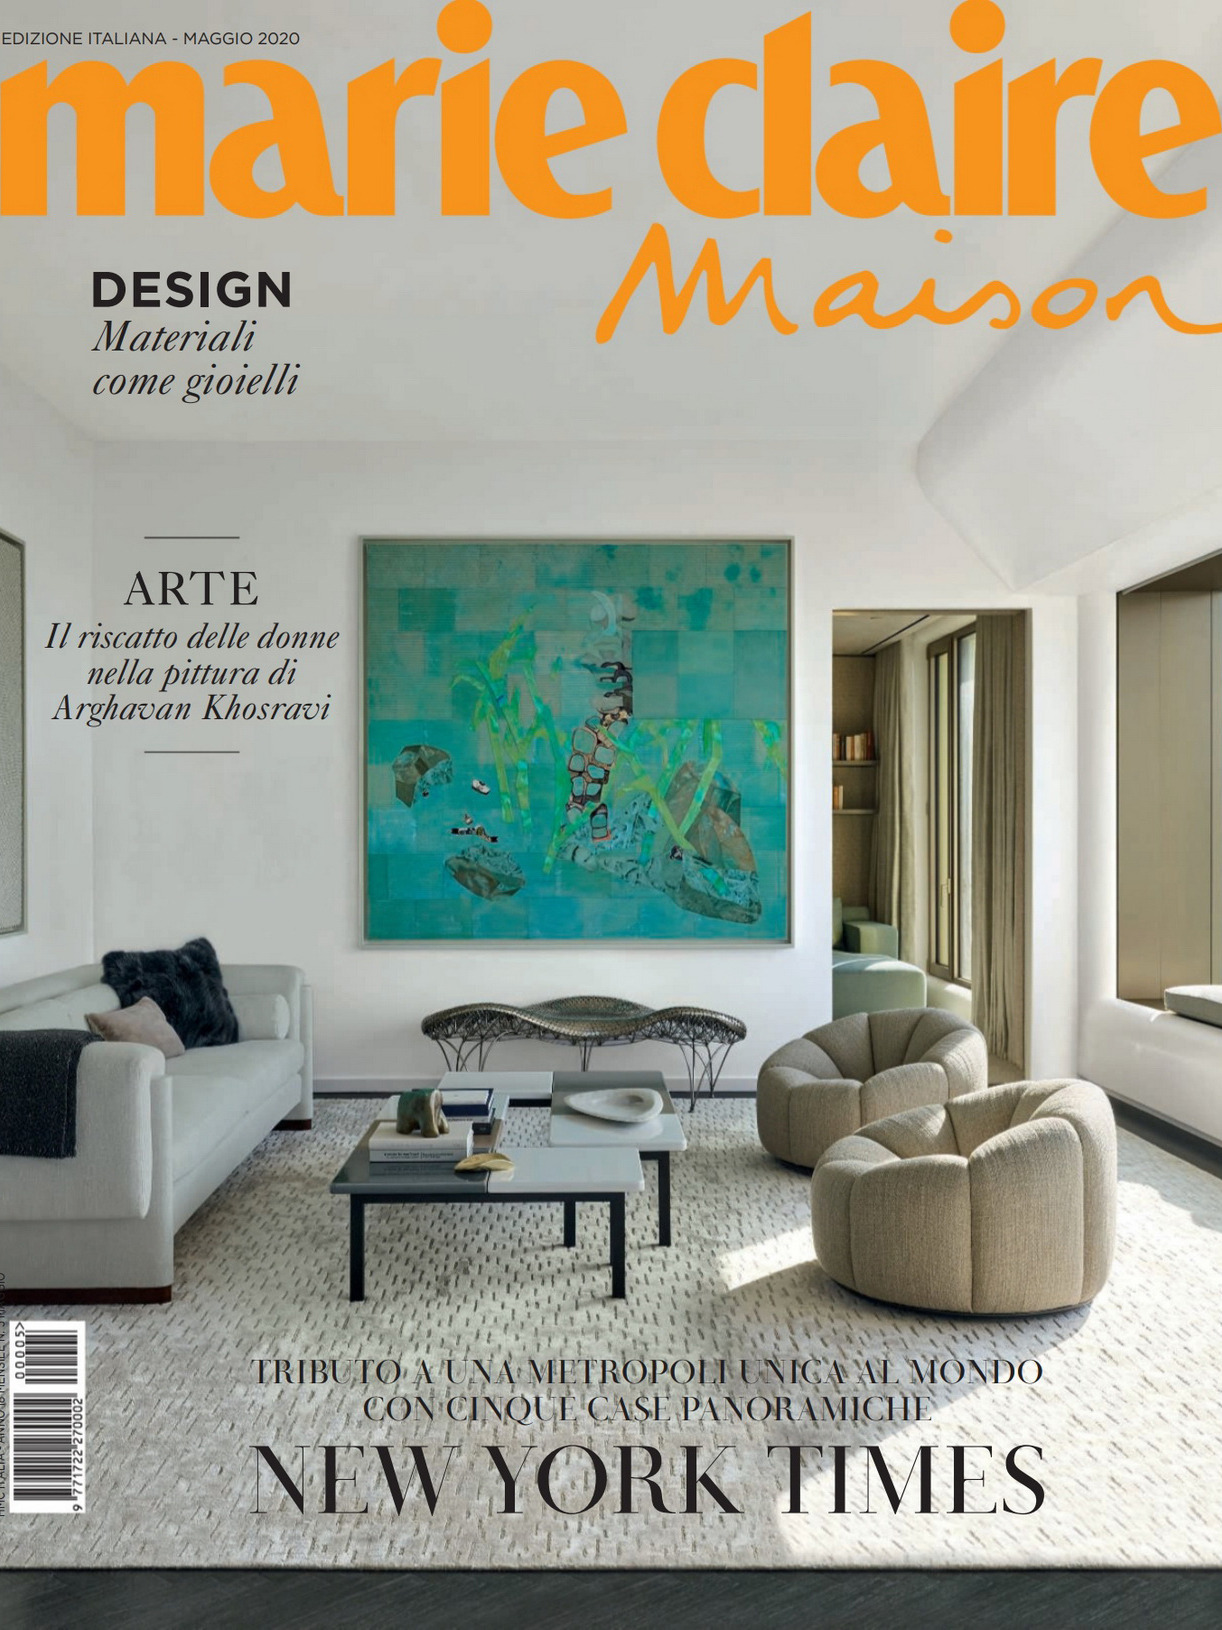 《Marie Claire maison》意大利版时尚室内设计杂志2020年05月号